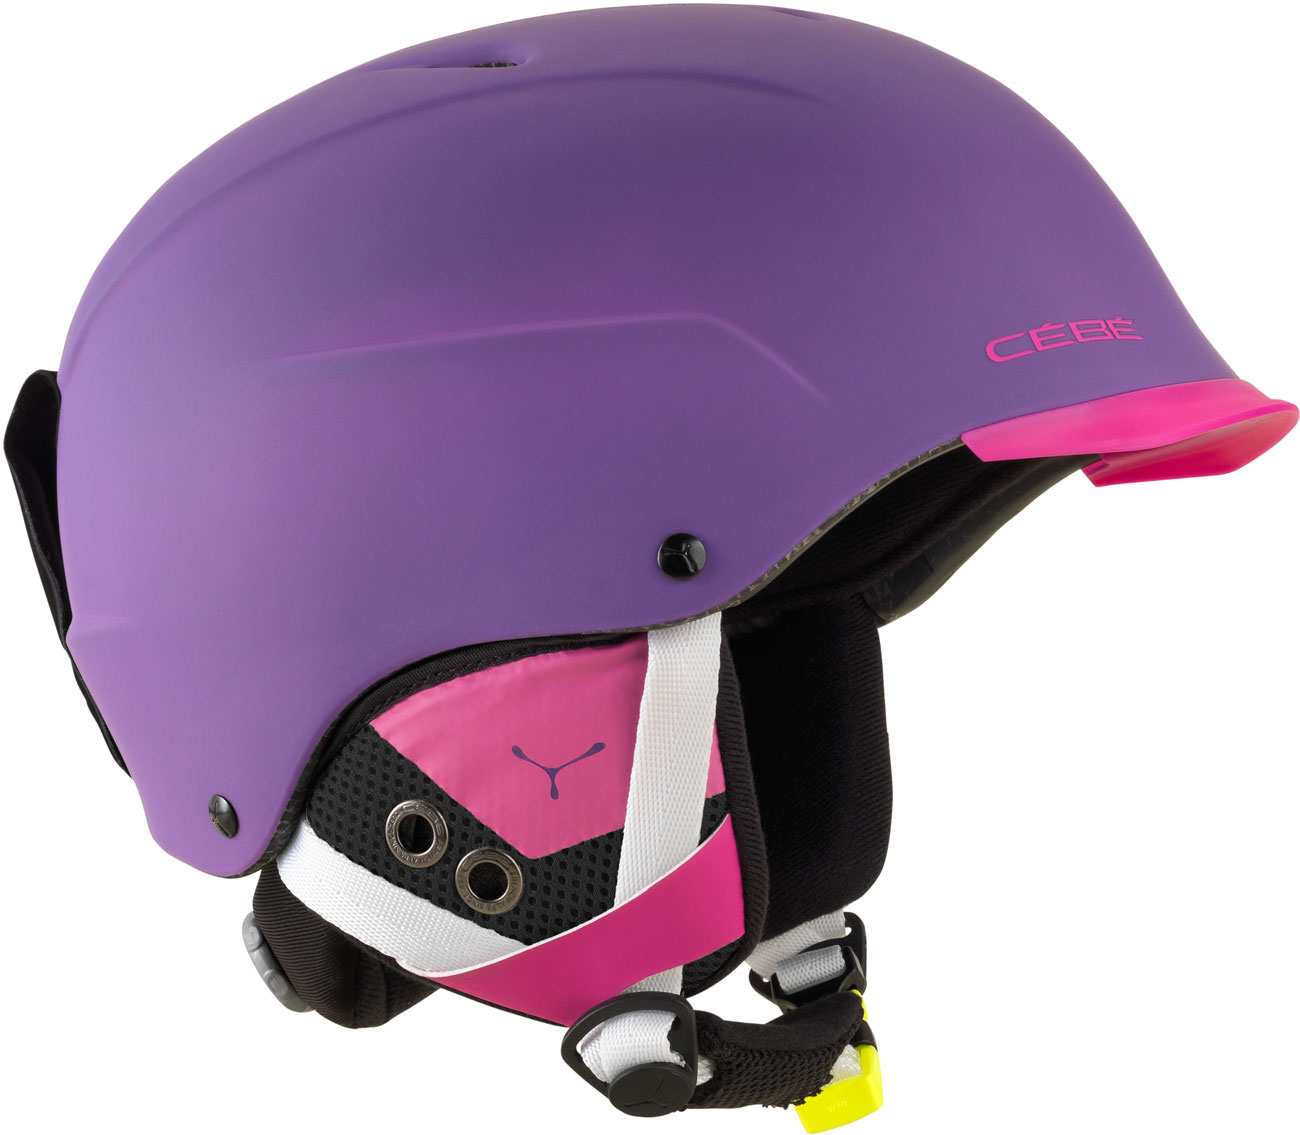 Cebe Contest Visor Ski and Snowboard Visor Helmet